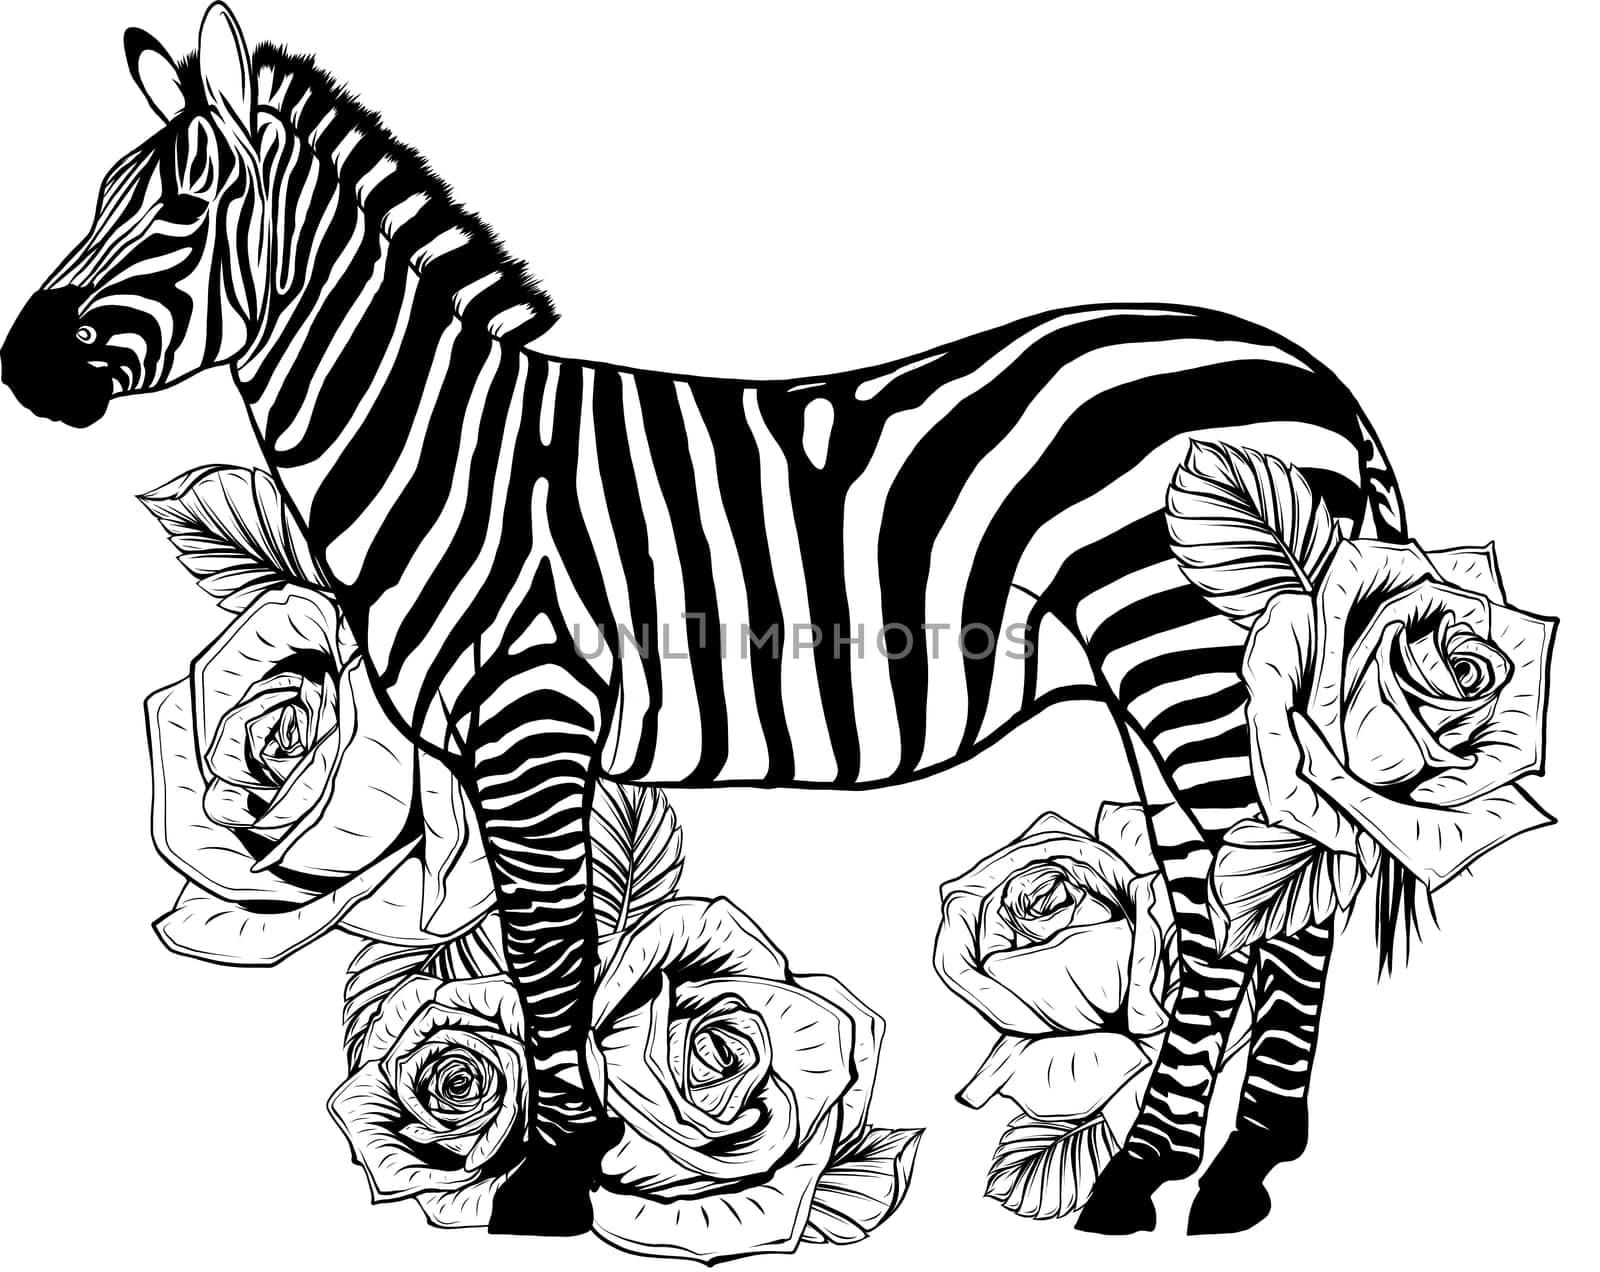 Zebra with rose flower hand drawn s